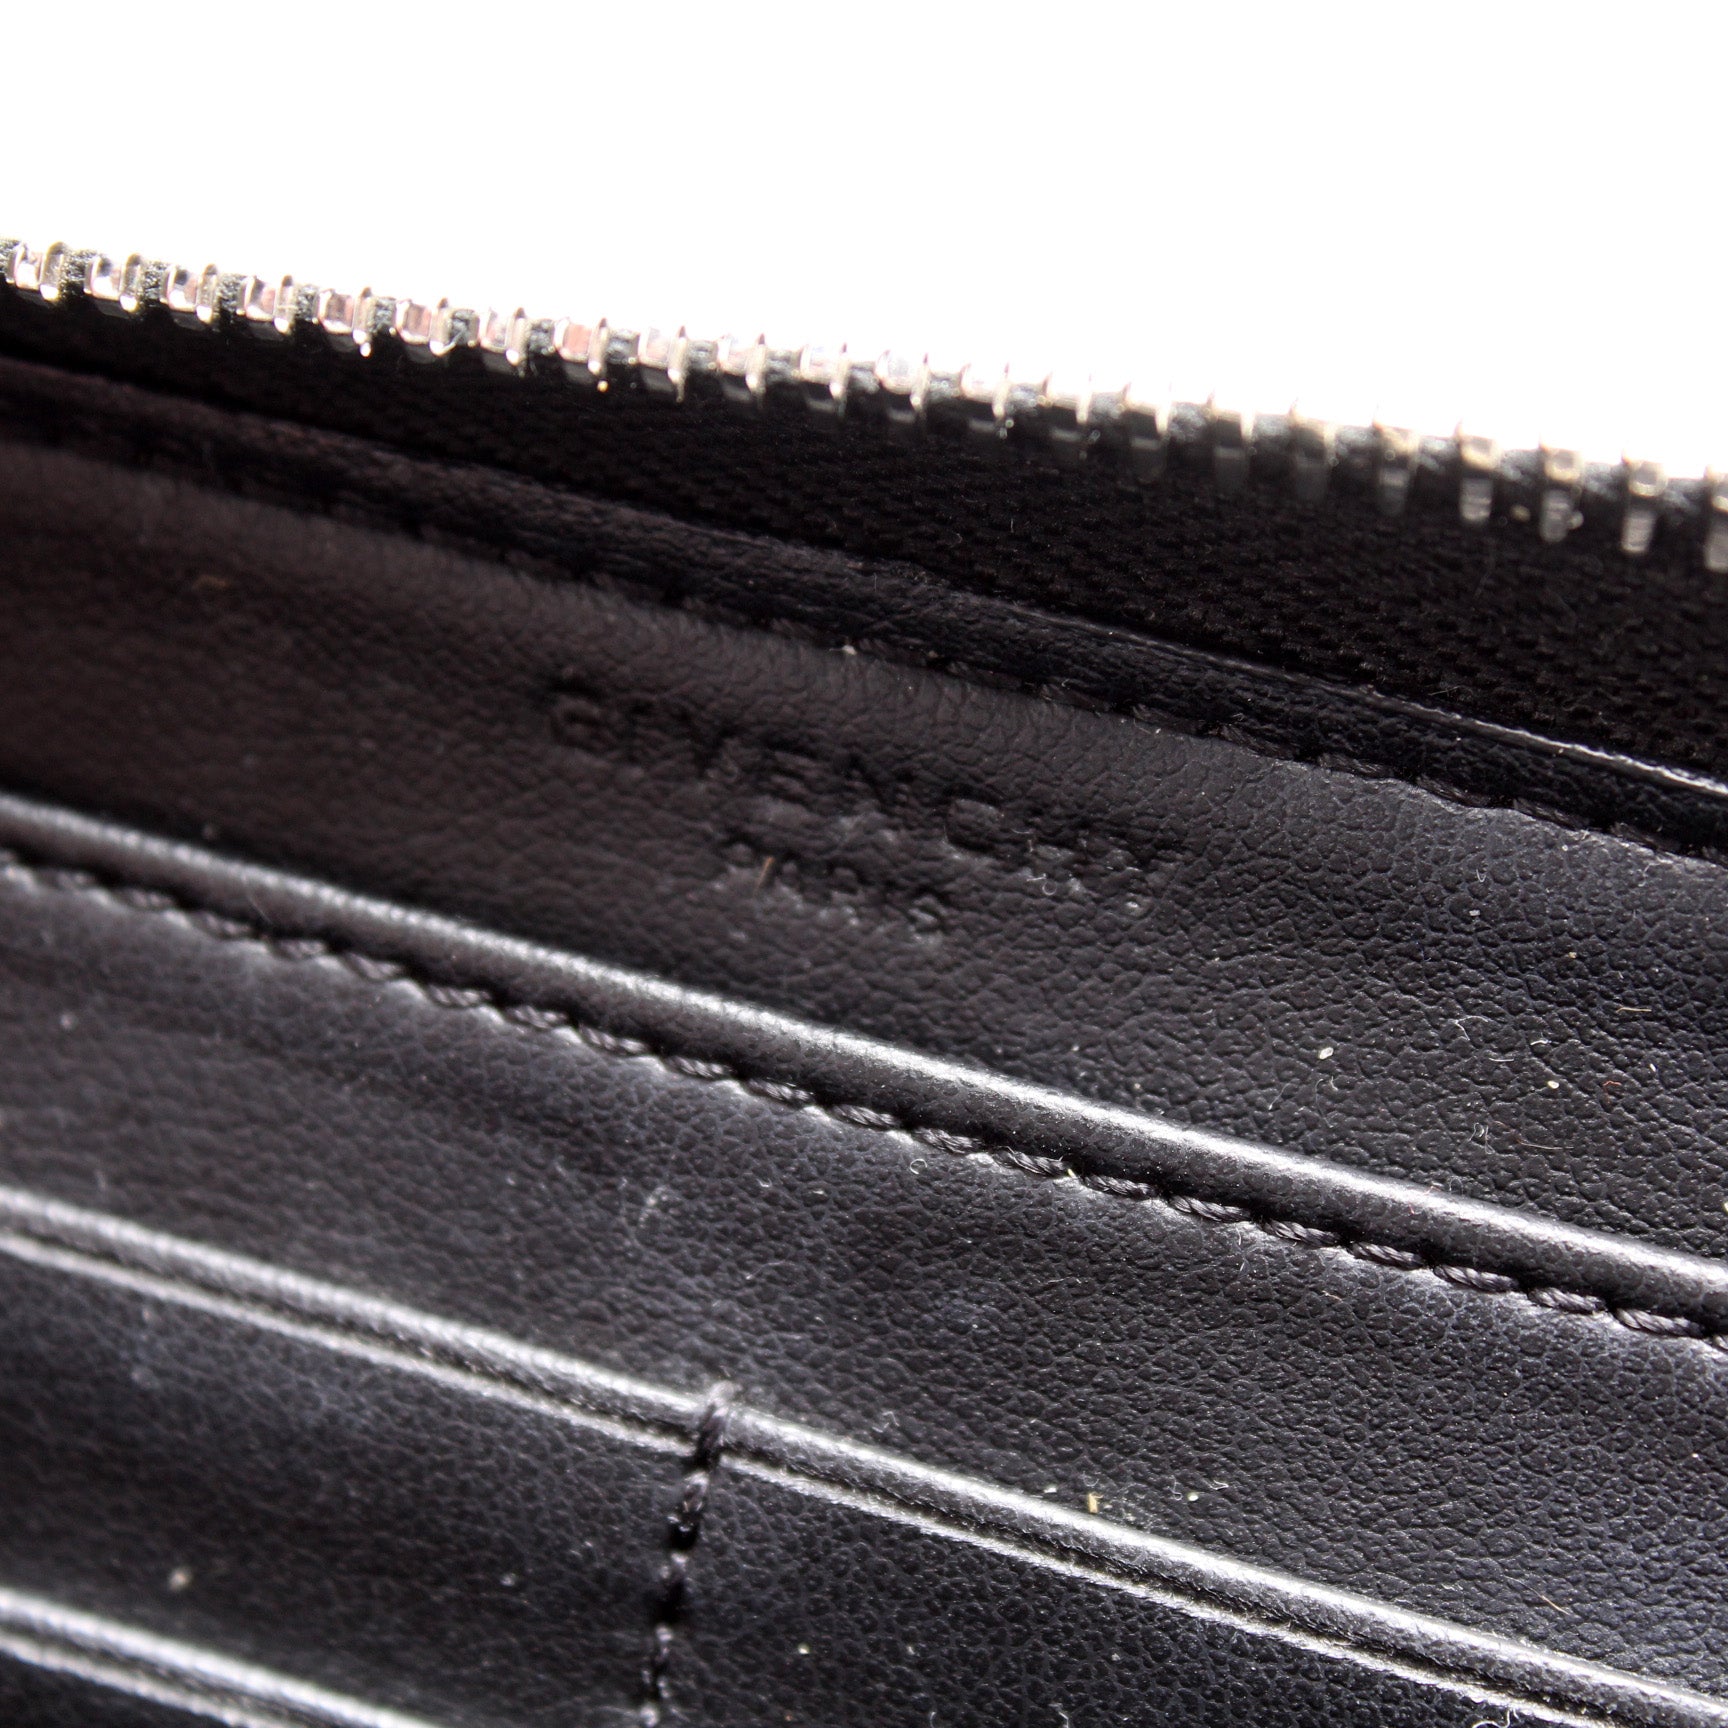 625576 GG Nylon Off the Grid Zip Around Wallet – Keeks Designer Handbags